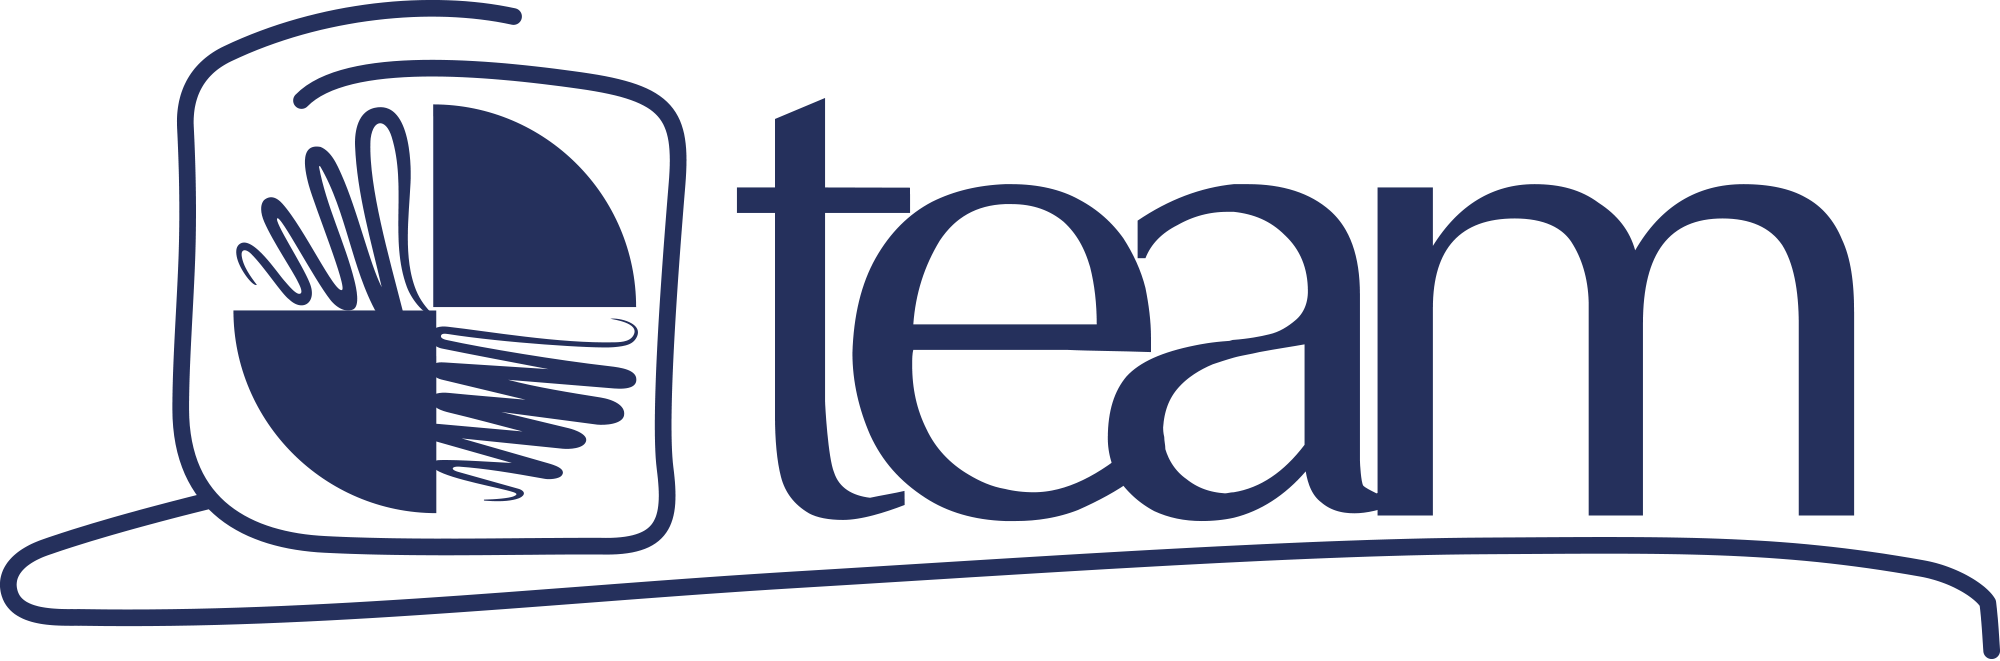 team-logo-azul.png